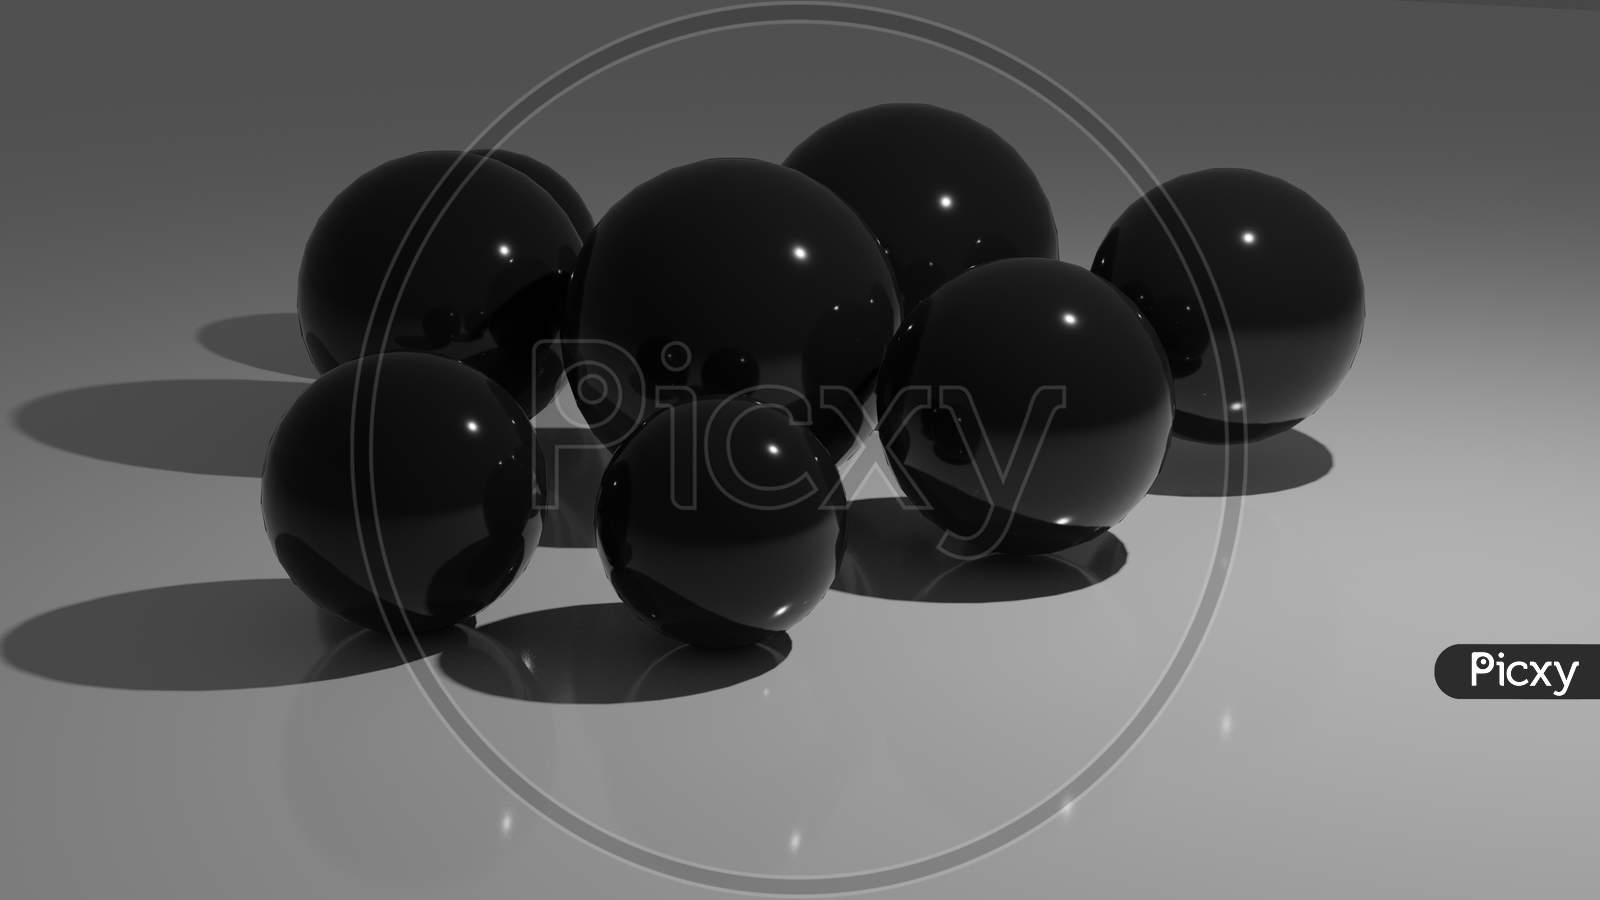 Metal balls with shining floor 3D illustration